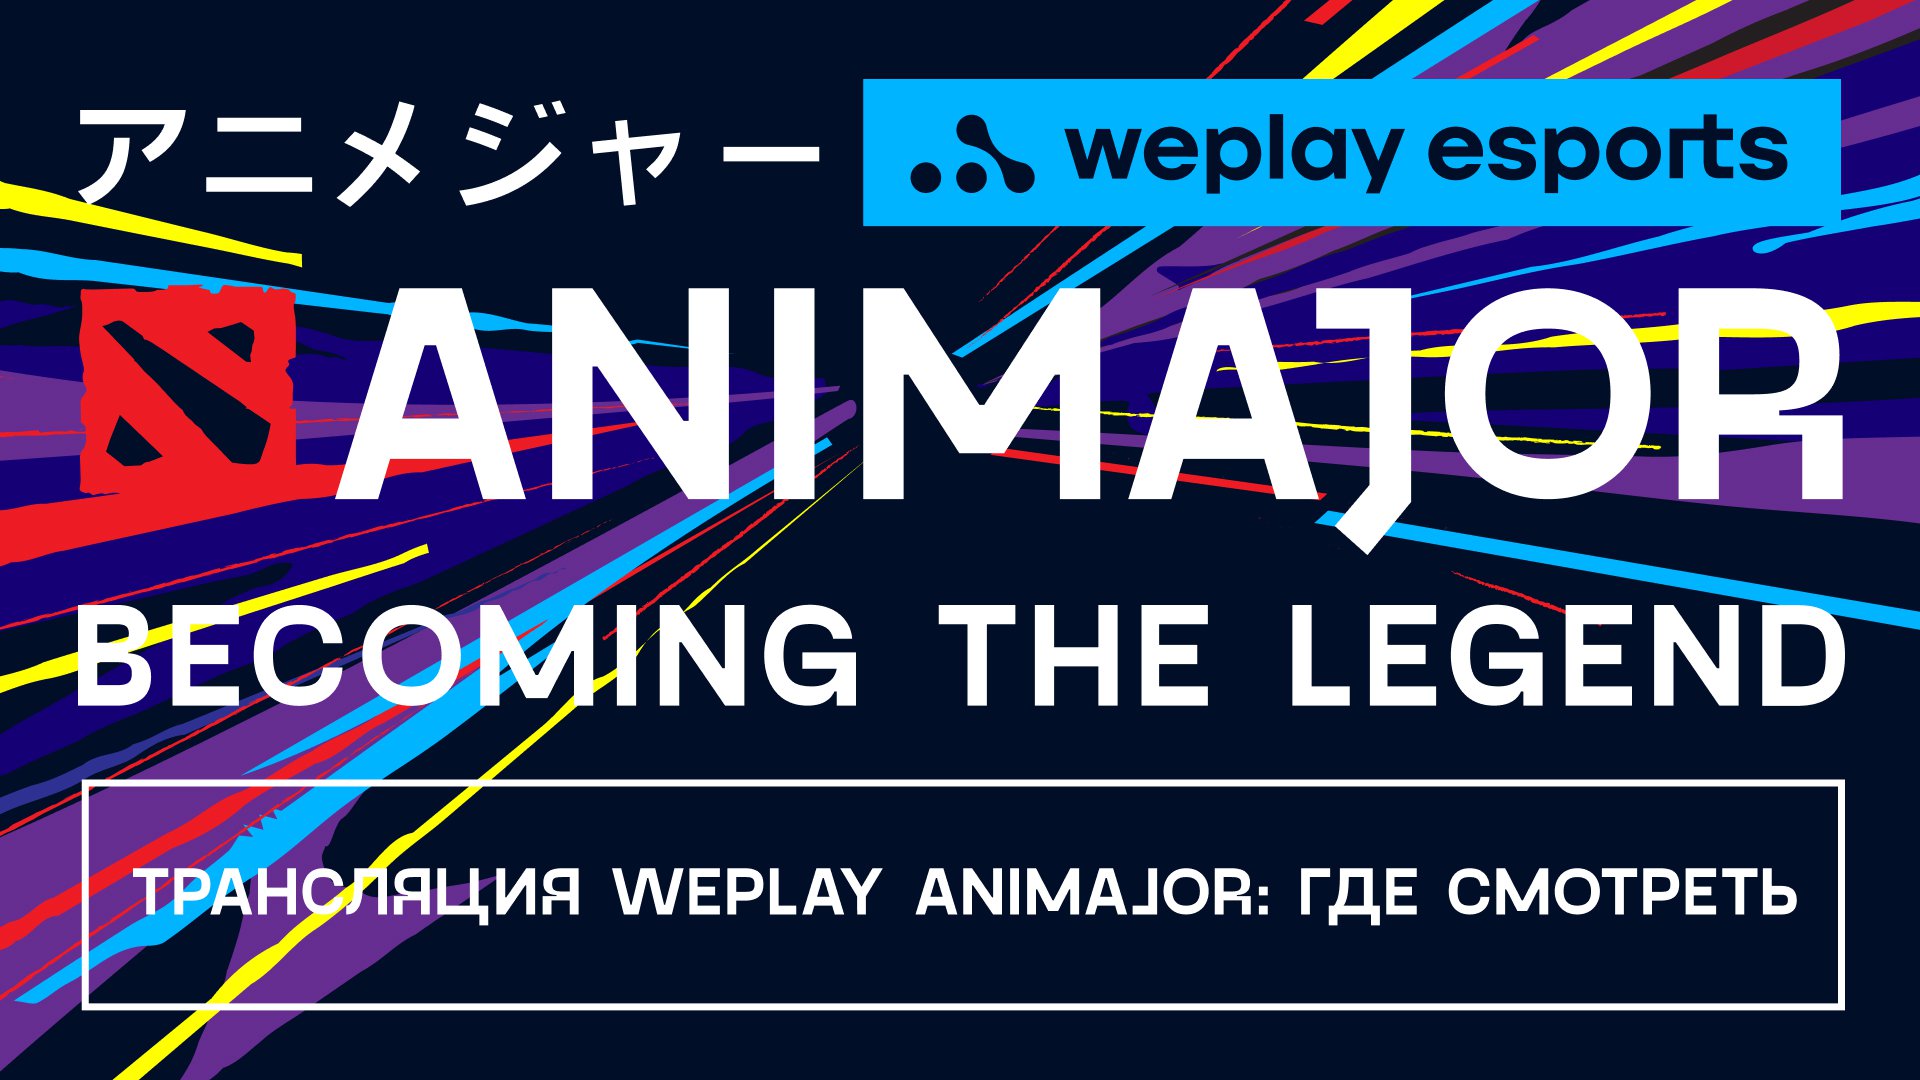 Трансляция WePlay AniMajor. Изображение: WePlay Holding